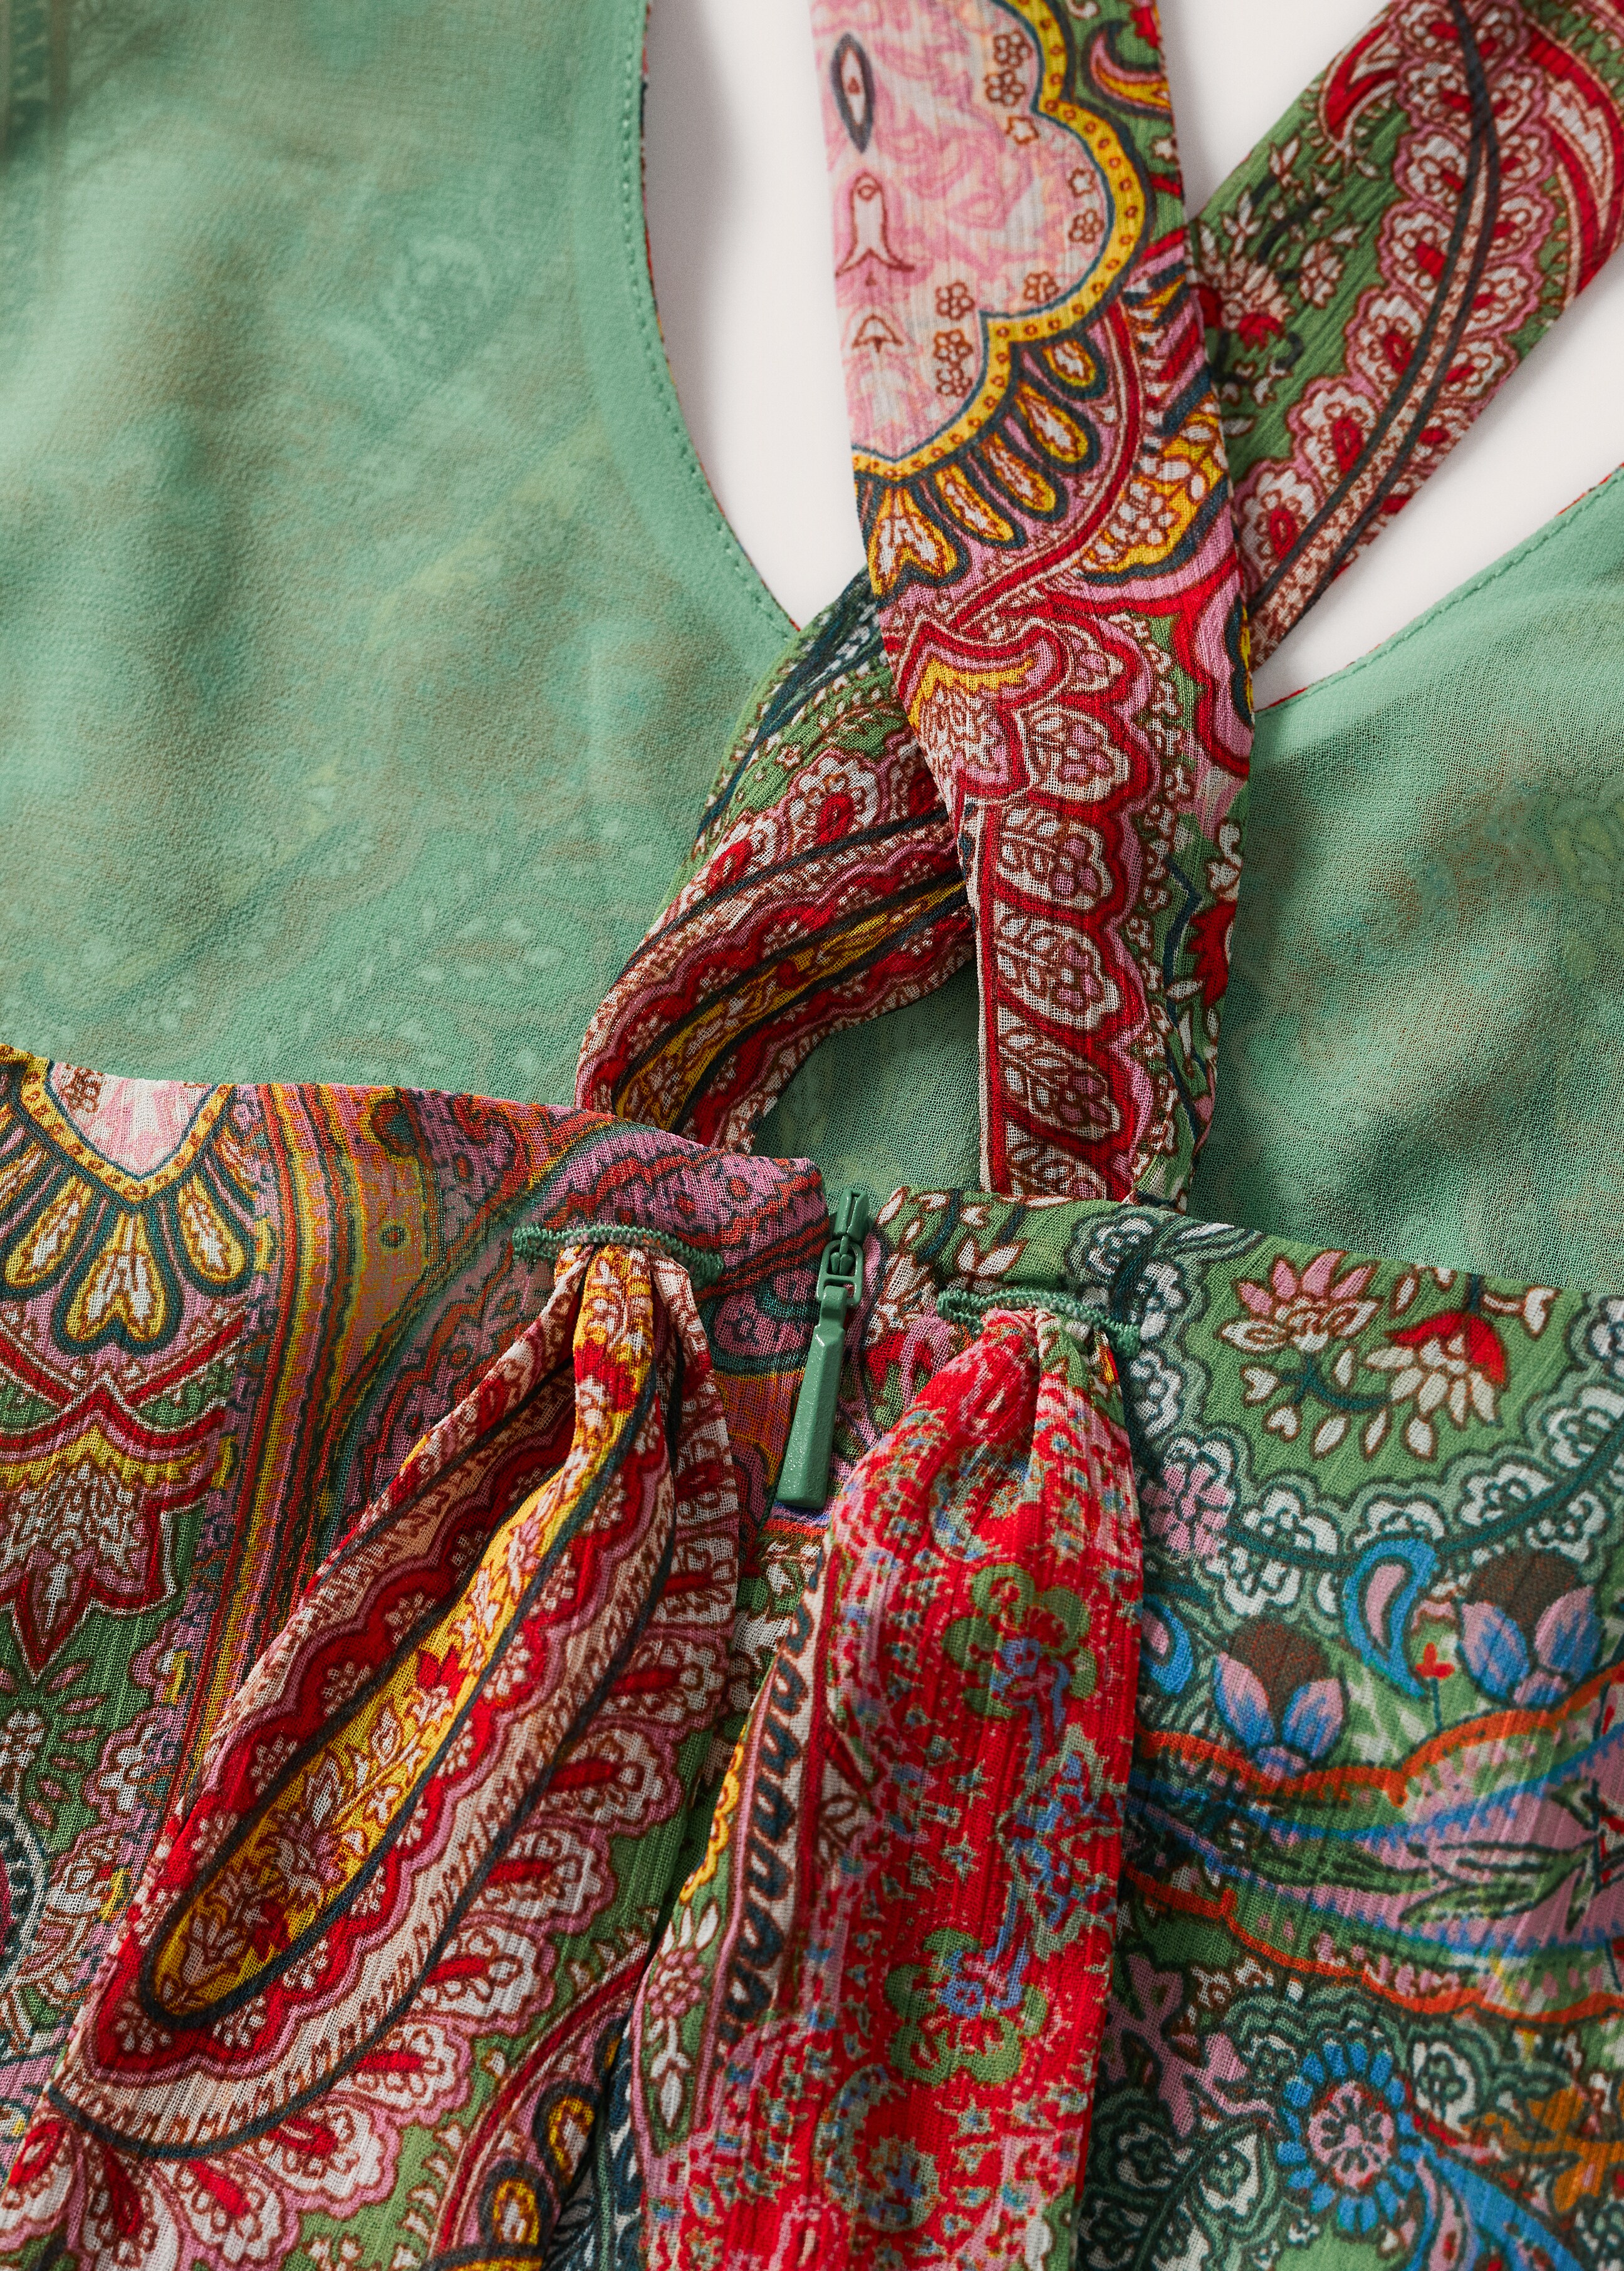 Paisley chiffon dress - Details of the article 8